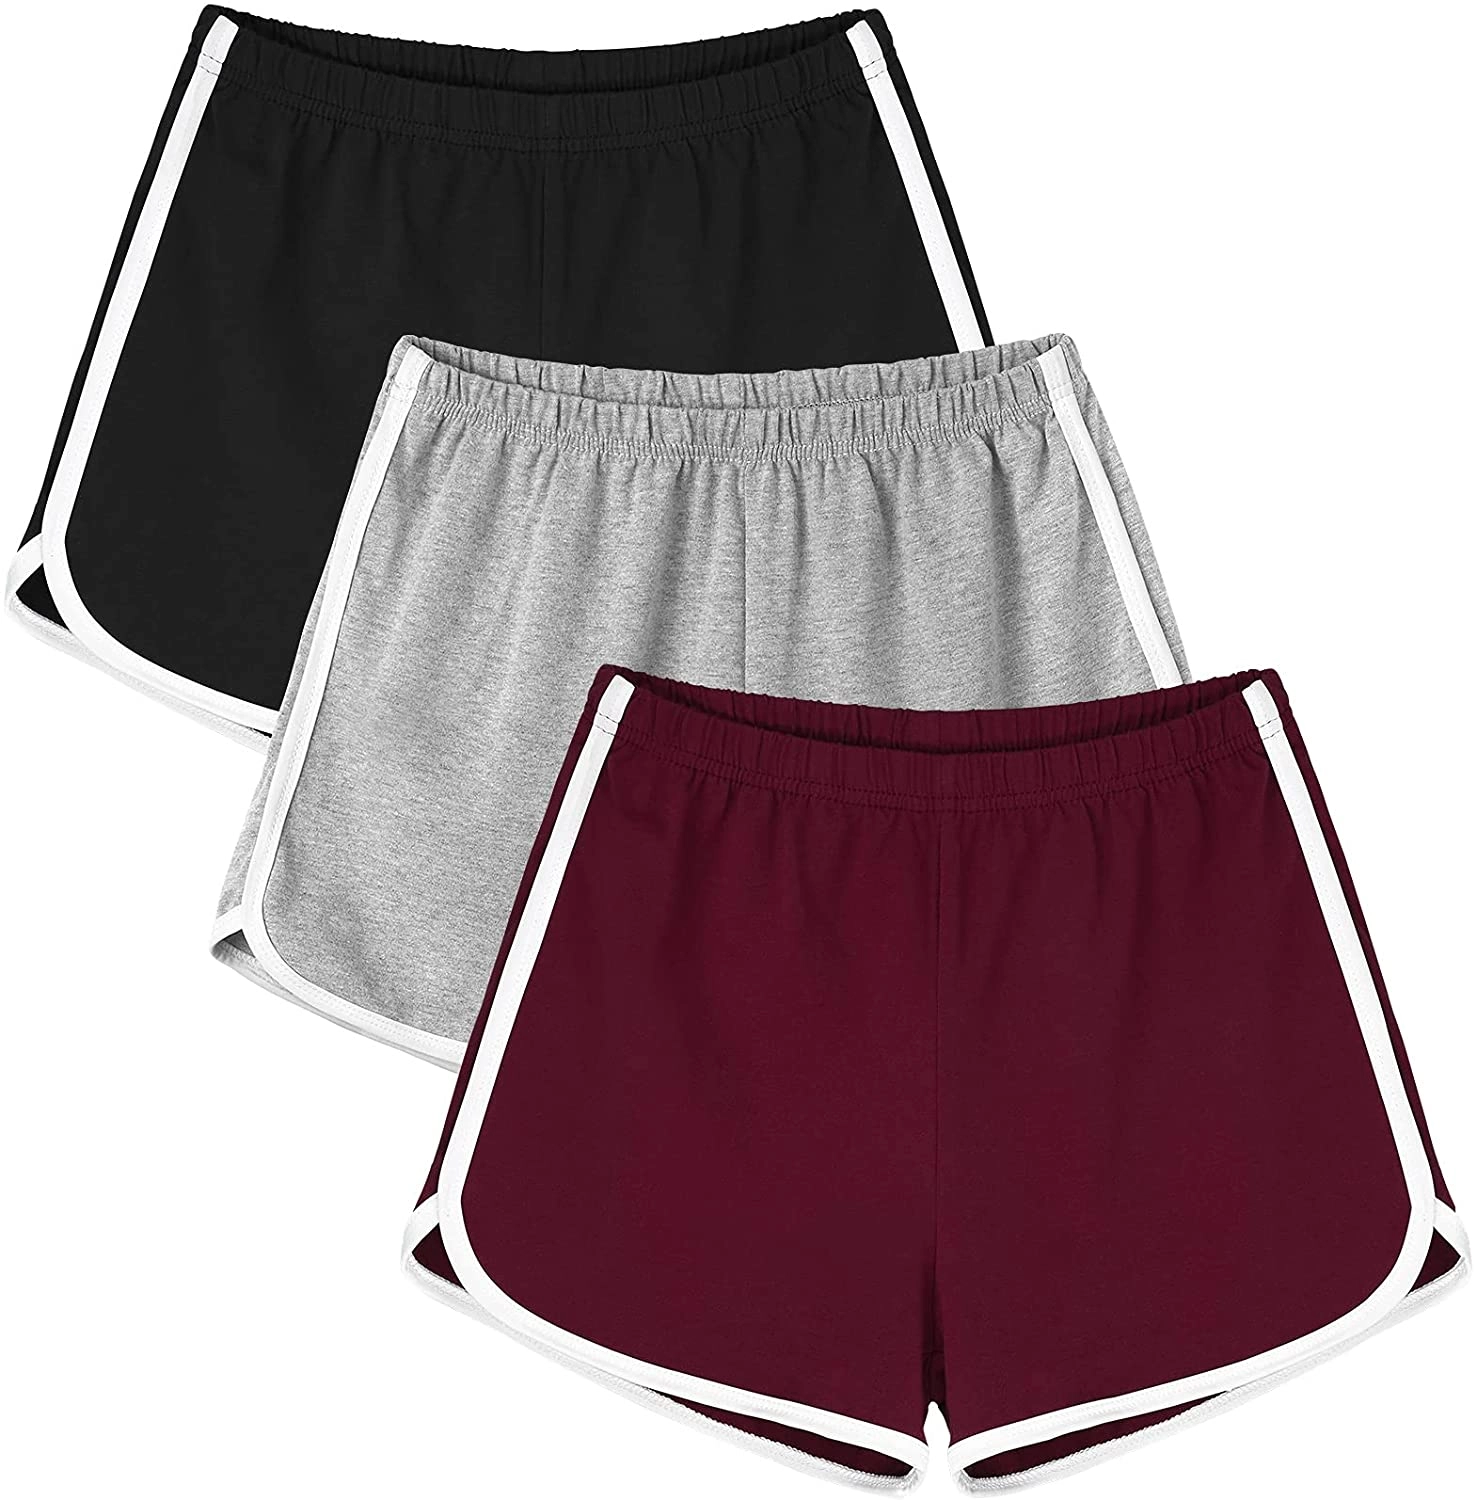 Cotton Sports Shorts Athletic Shorts Yoga Dance Summer Short Pants Customize Design